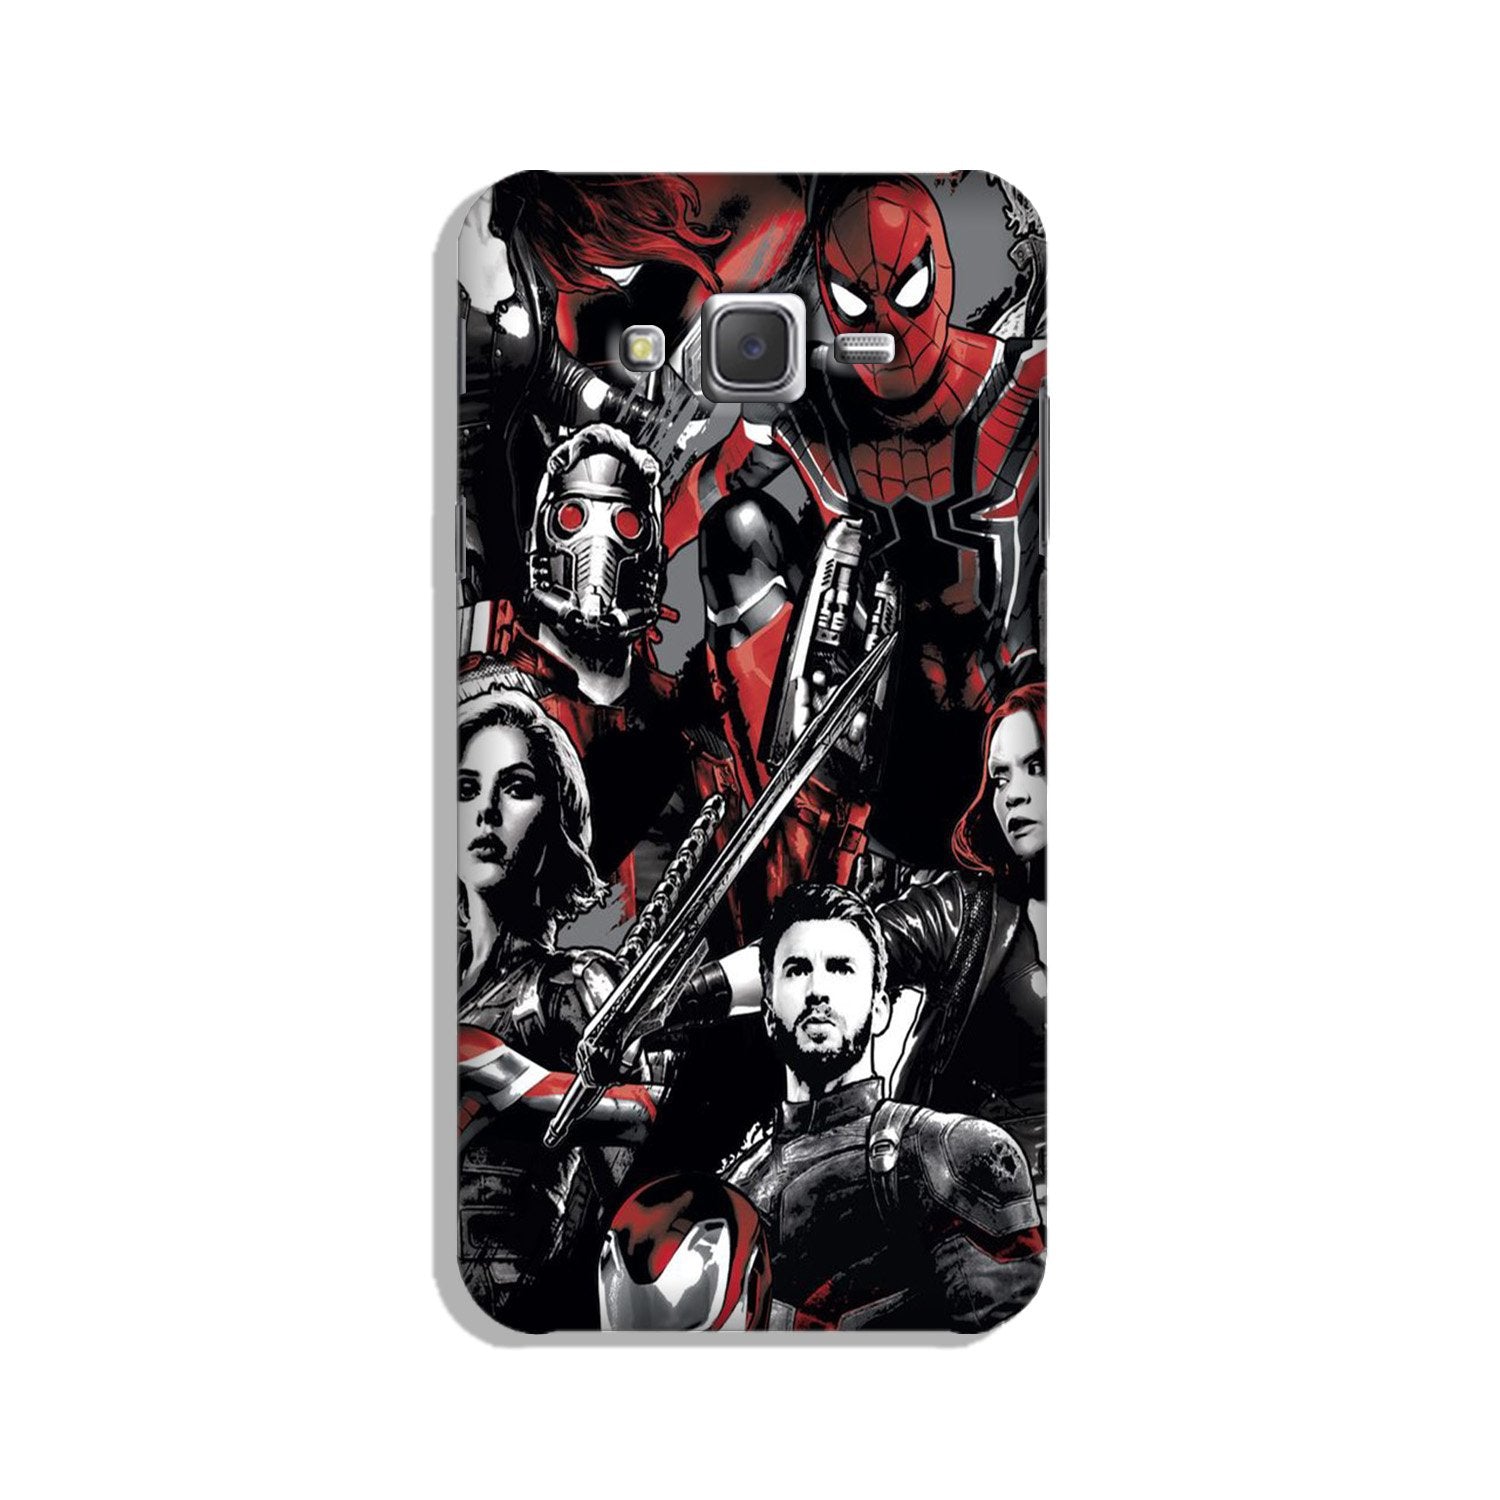 Avengers Case for Galaxy E7 (Design - 190)